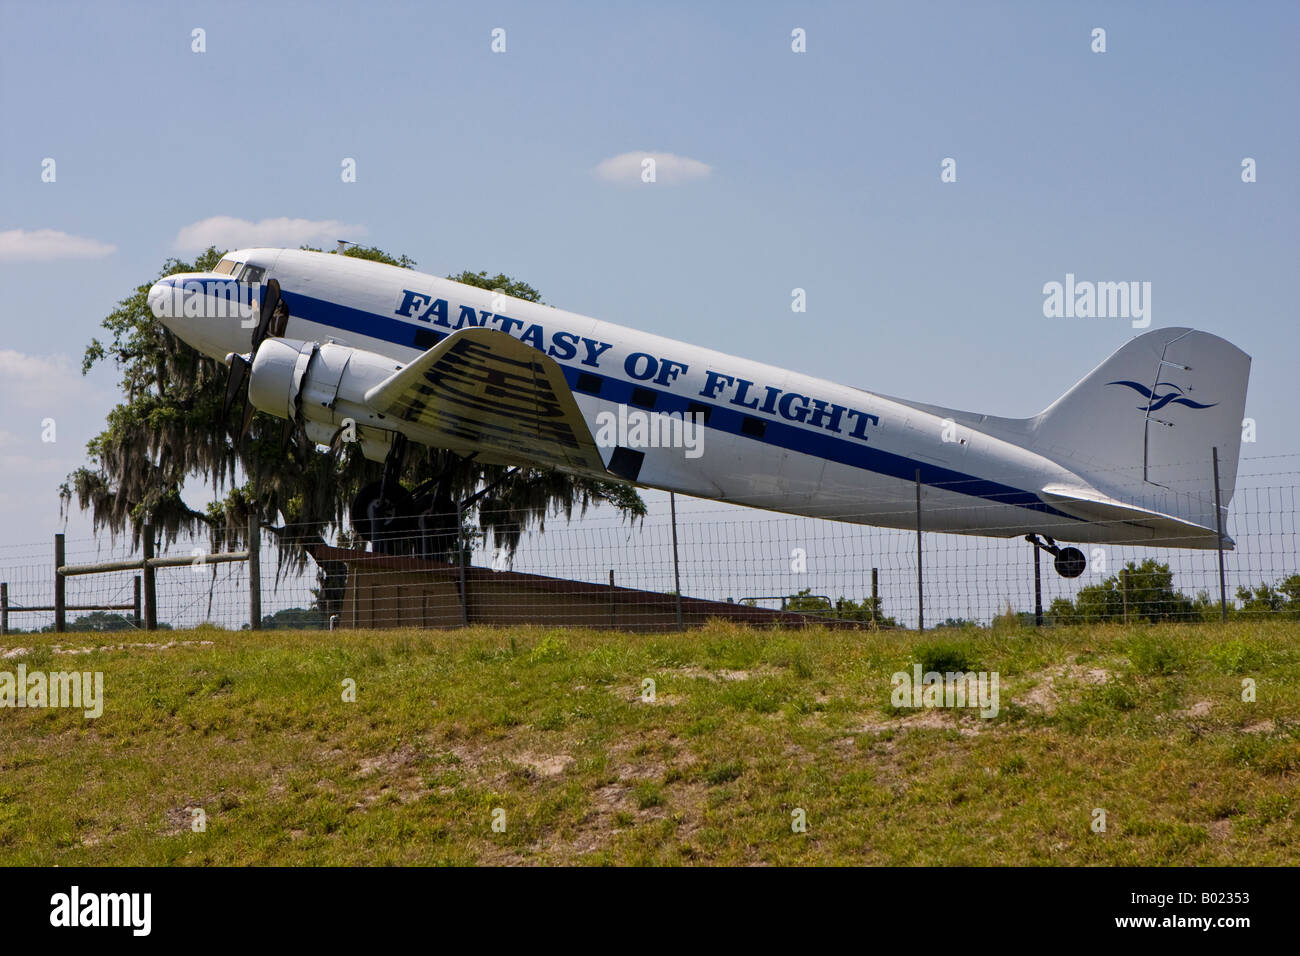 Fantasy Flight niedrig fliegende Flugzeug Ausstellung in Orlando Florida USA U S Fl Stockfoto